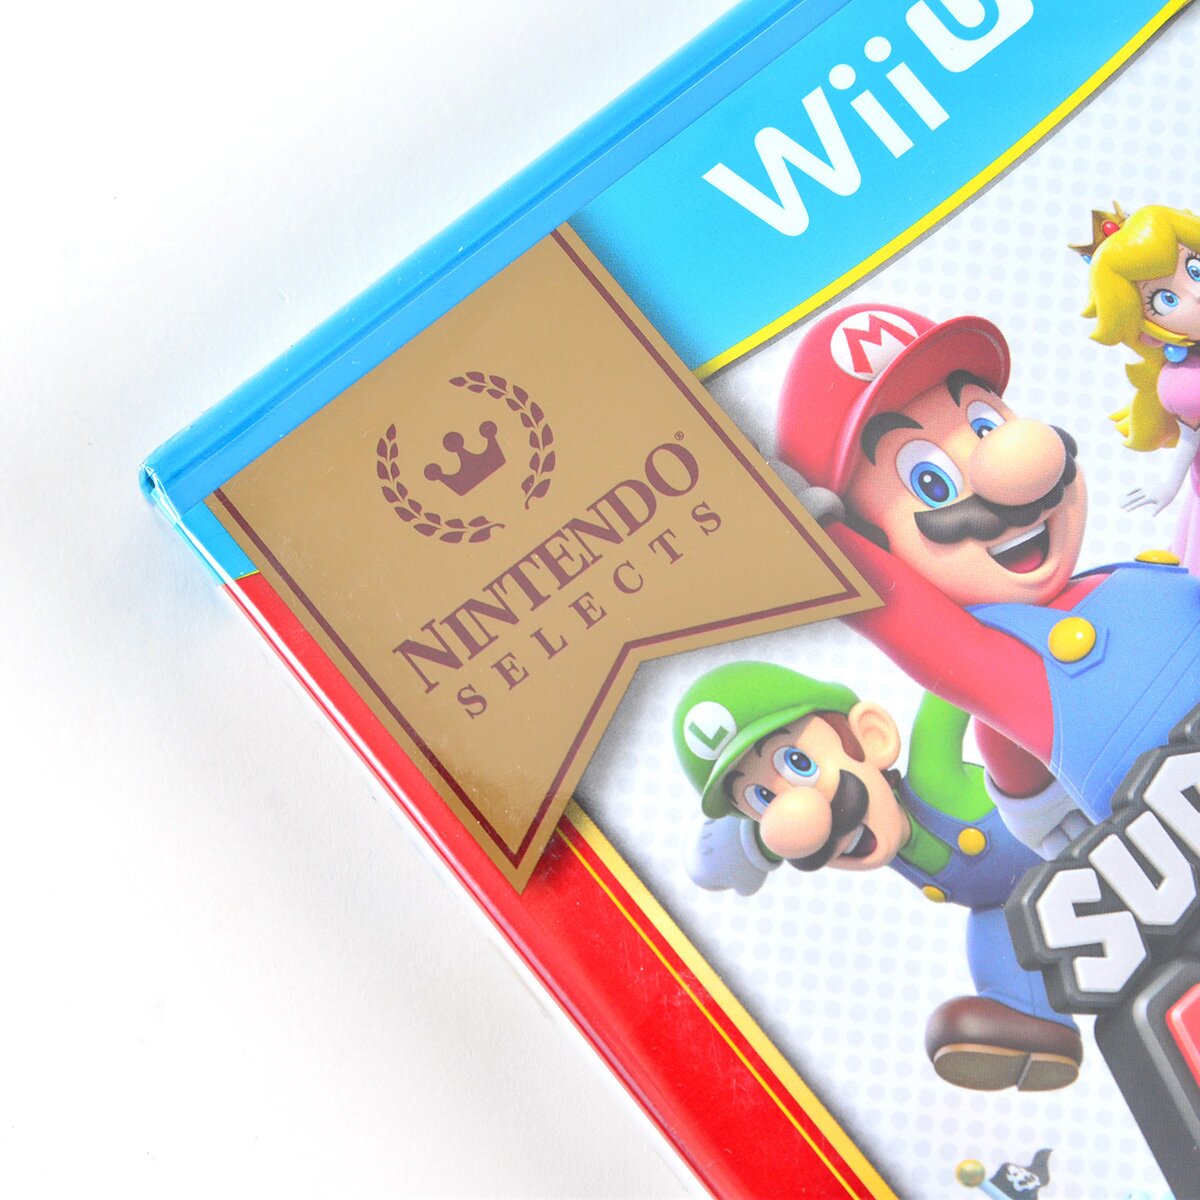 Super Mario 3D World: Nintendo Selects